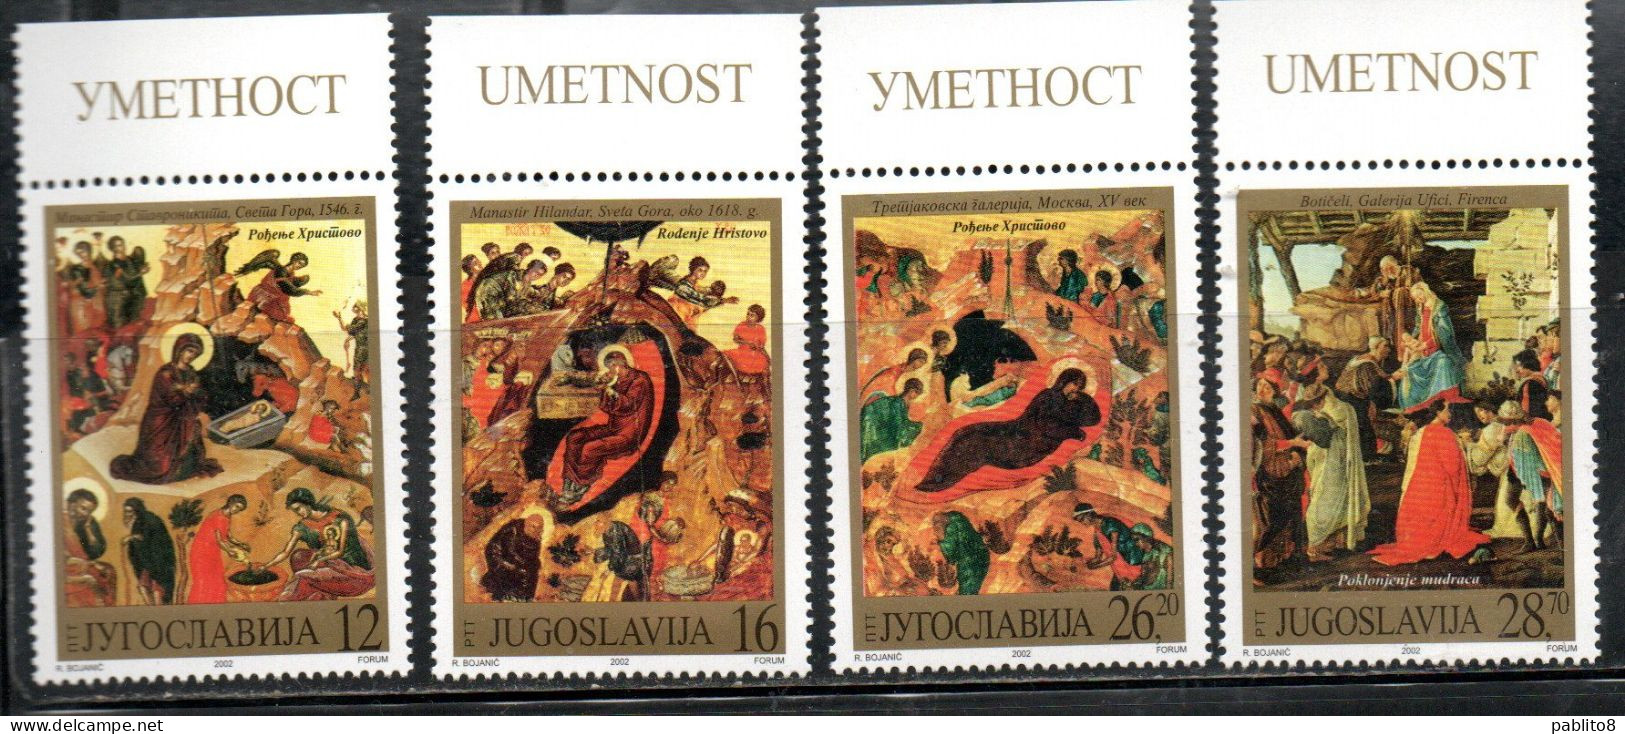 JUGOSLAVIA YUGOSLAVIA 2002 CHRISTMAS NATALE NOEL WEIHNACHTEN NAVIDAD COMPLETE SET SERIE COMPLETA MNH - Unused Stamps